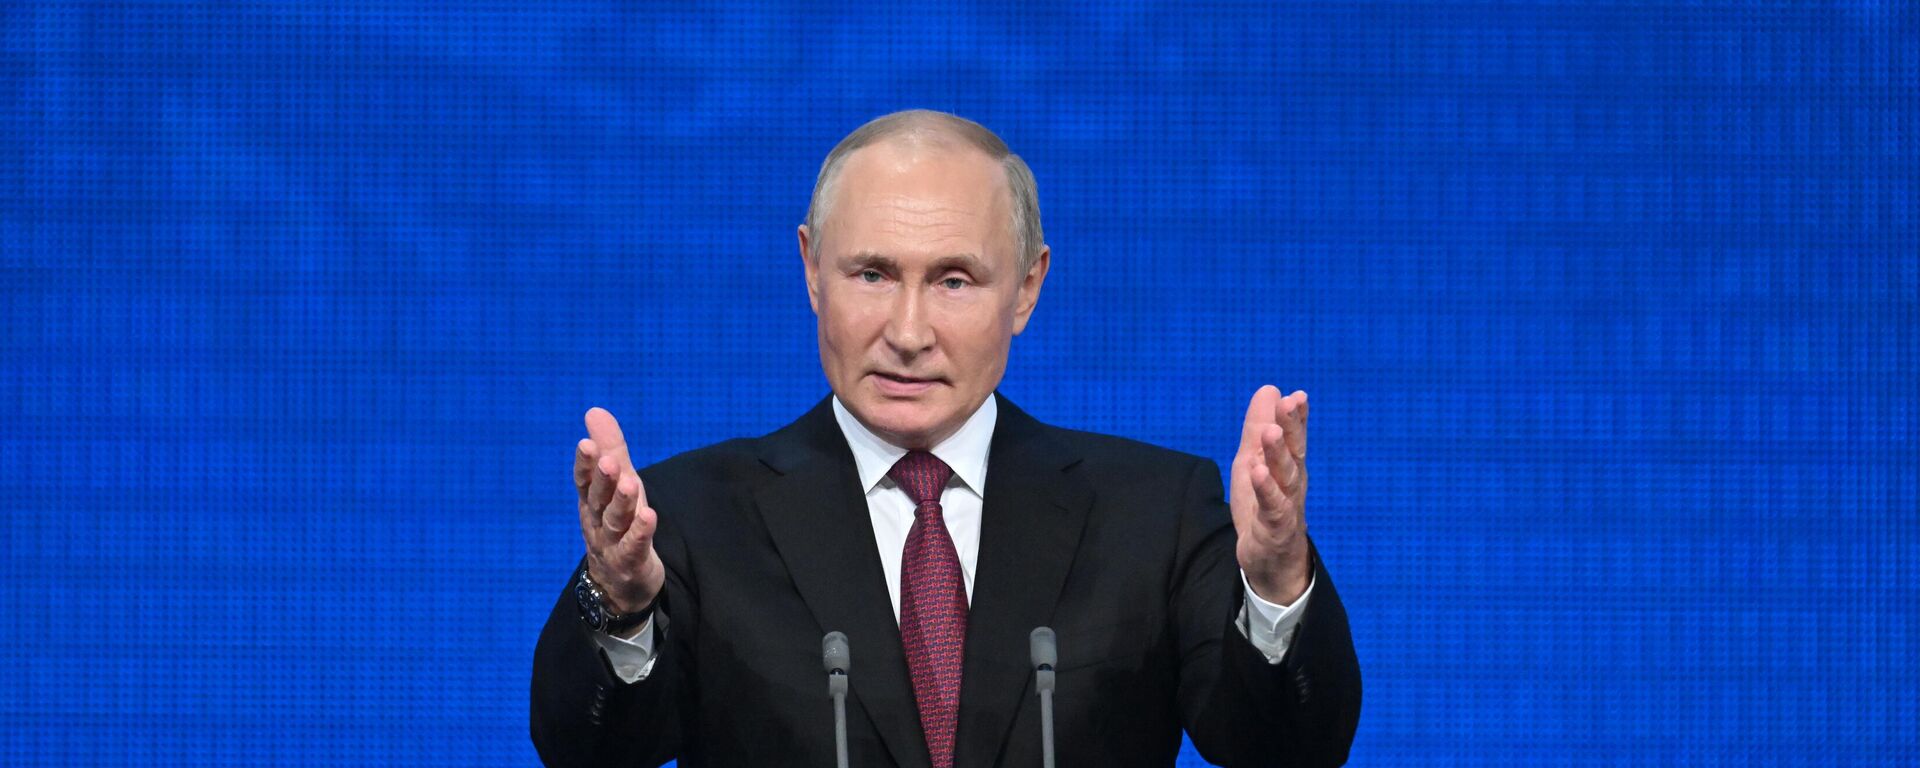 O presidente da Rússia, Vladimir Putin, discursa durante evento - Sputnik Brasil, 1920, 29.09.2022